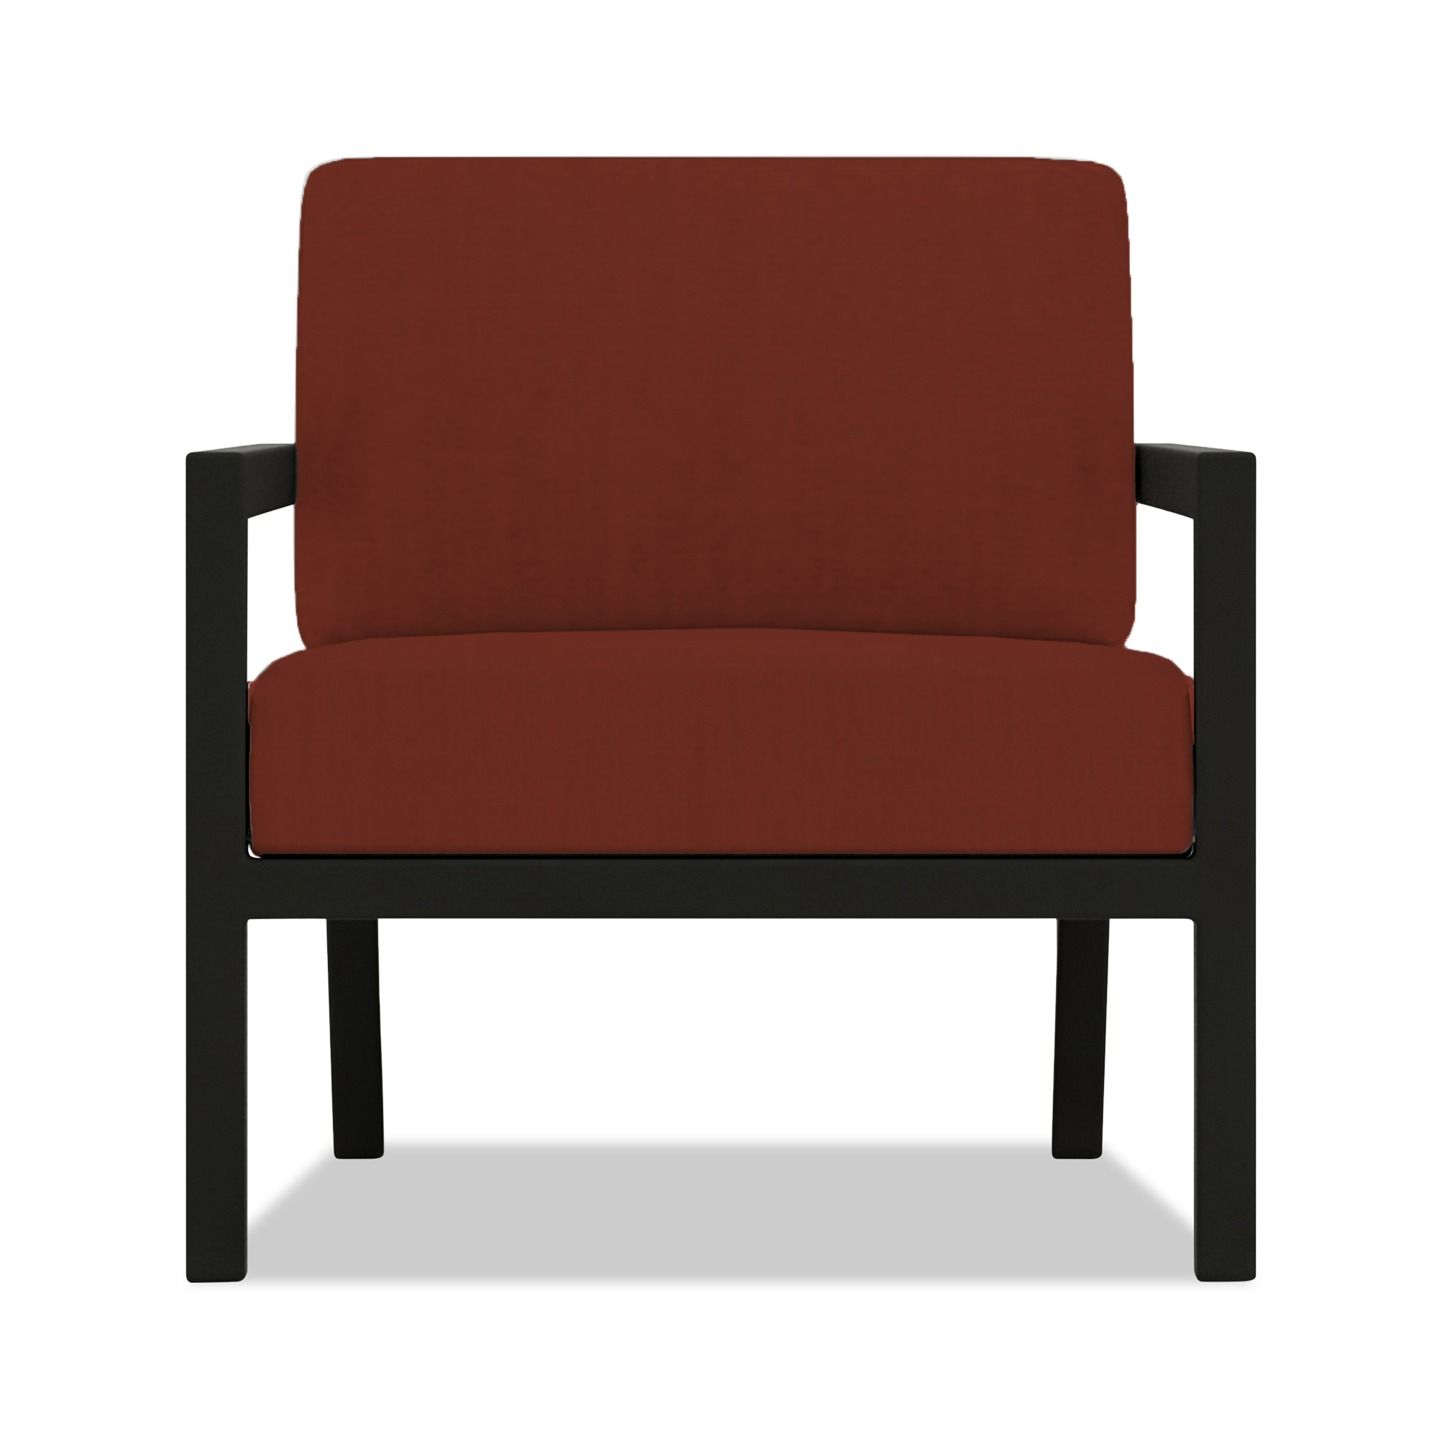 Harmonia Living - Pacifica Club Chair - Black | HL-PAC-BK-CC